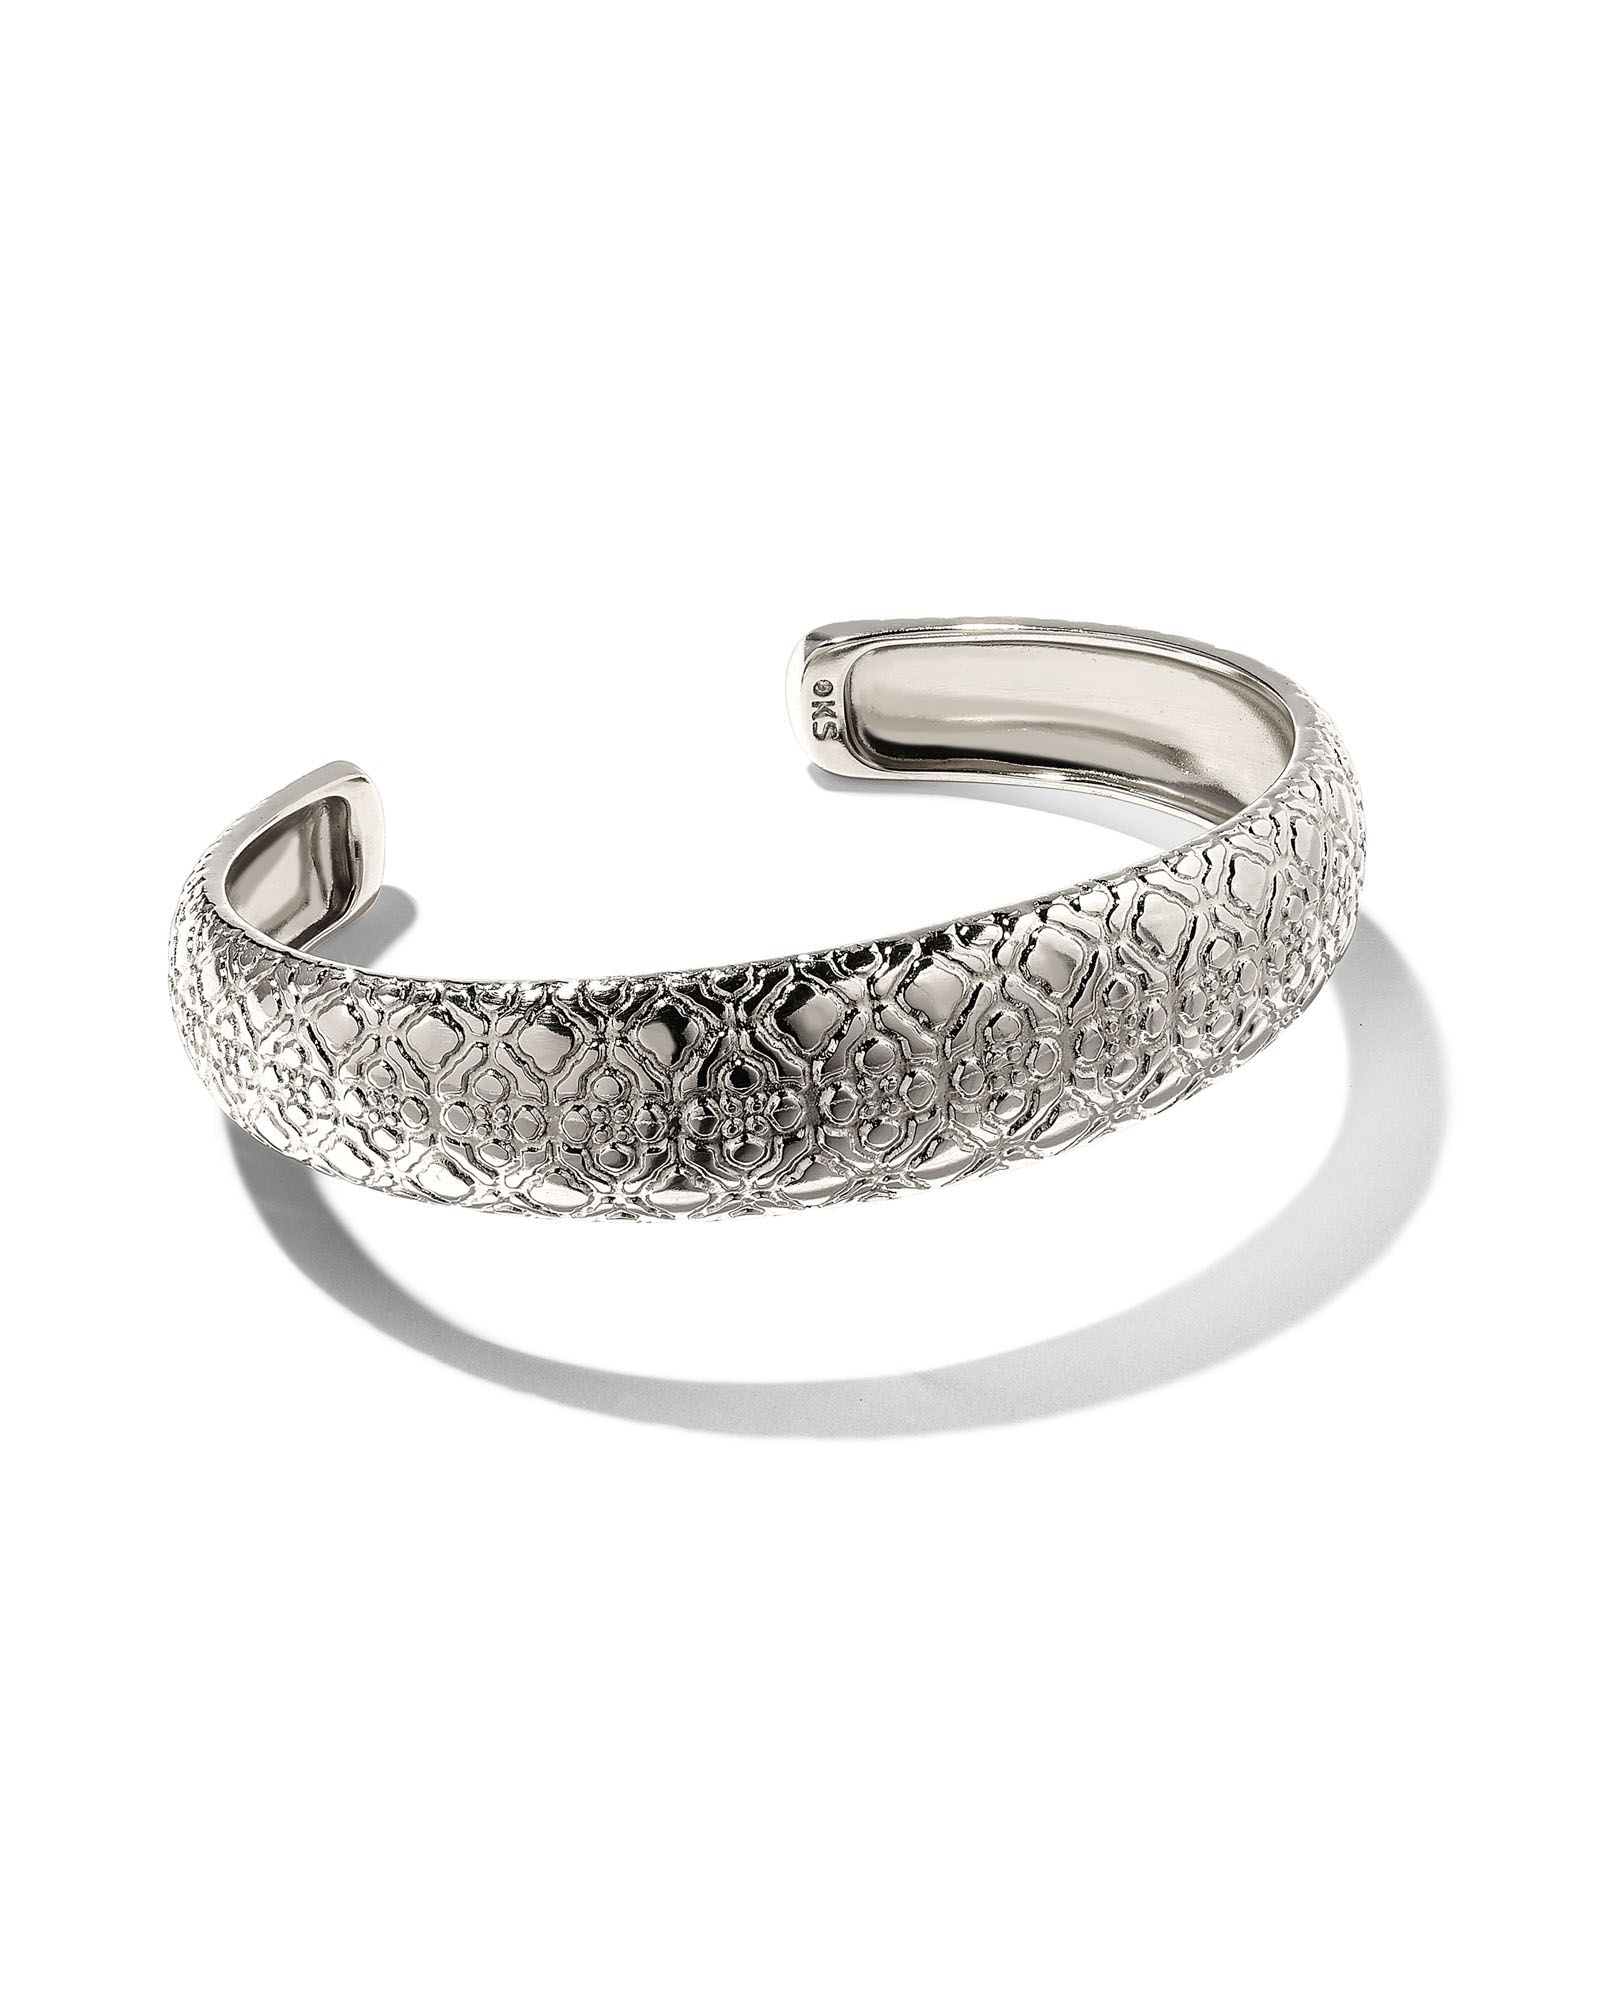 Harper Cuff Bracelet in Silver | Kendra Scott | Kendra Scott